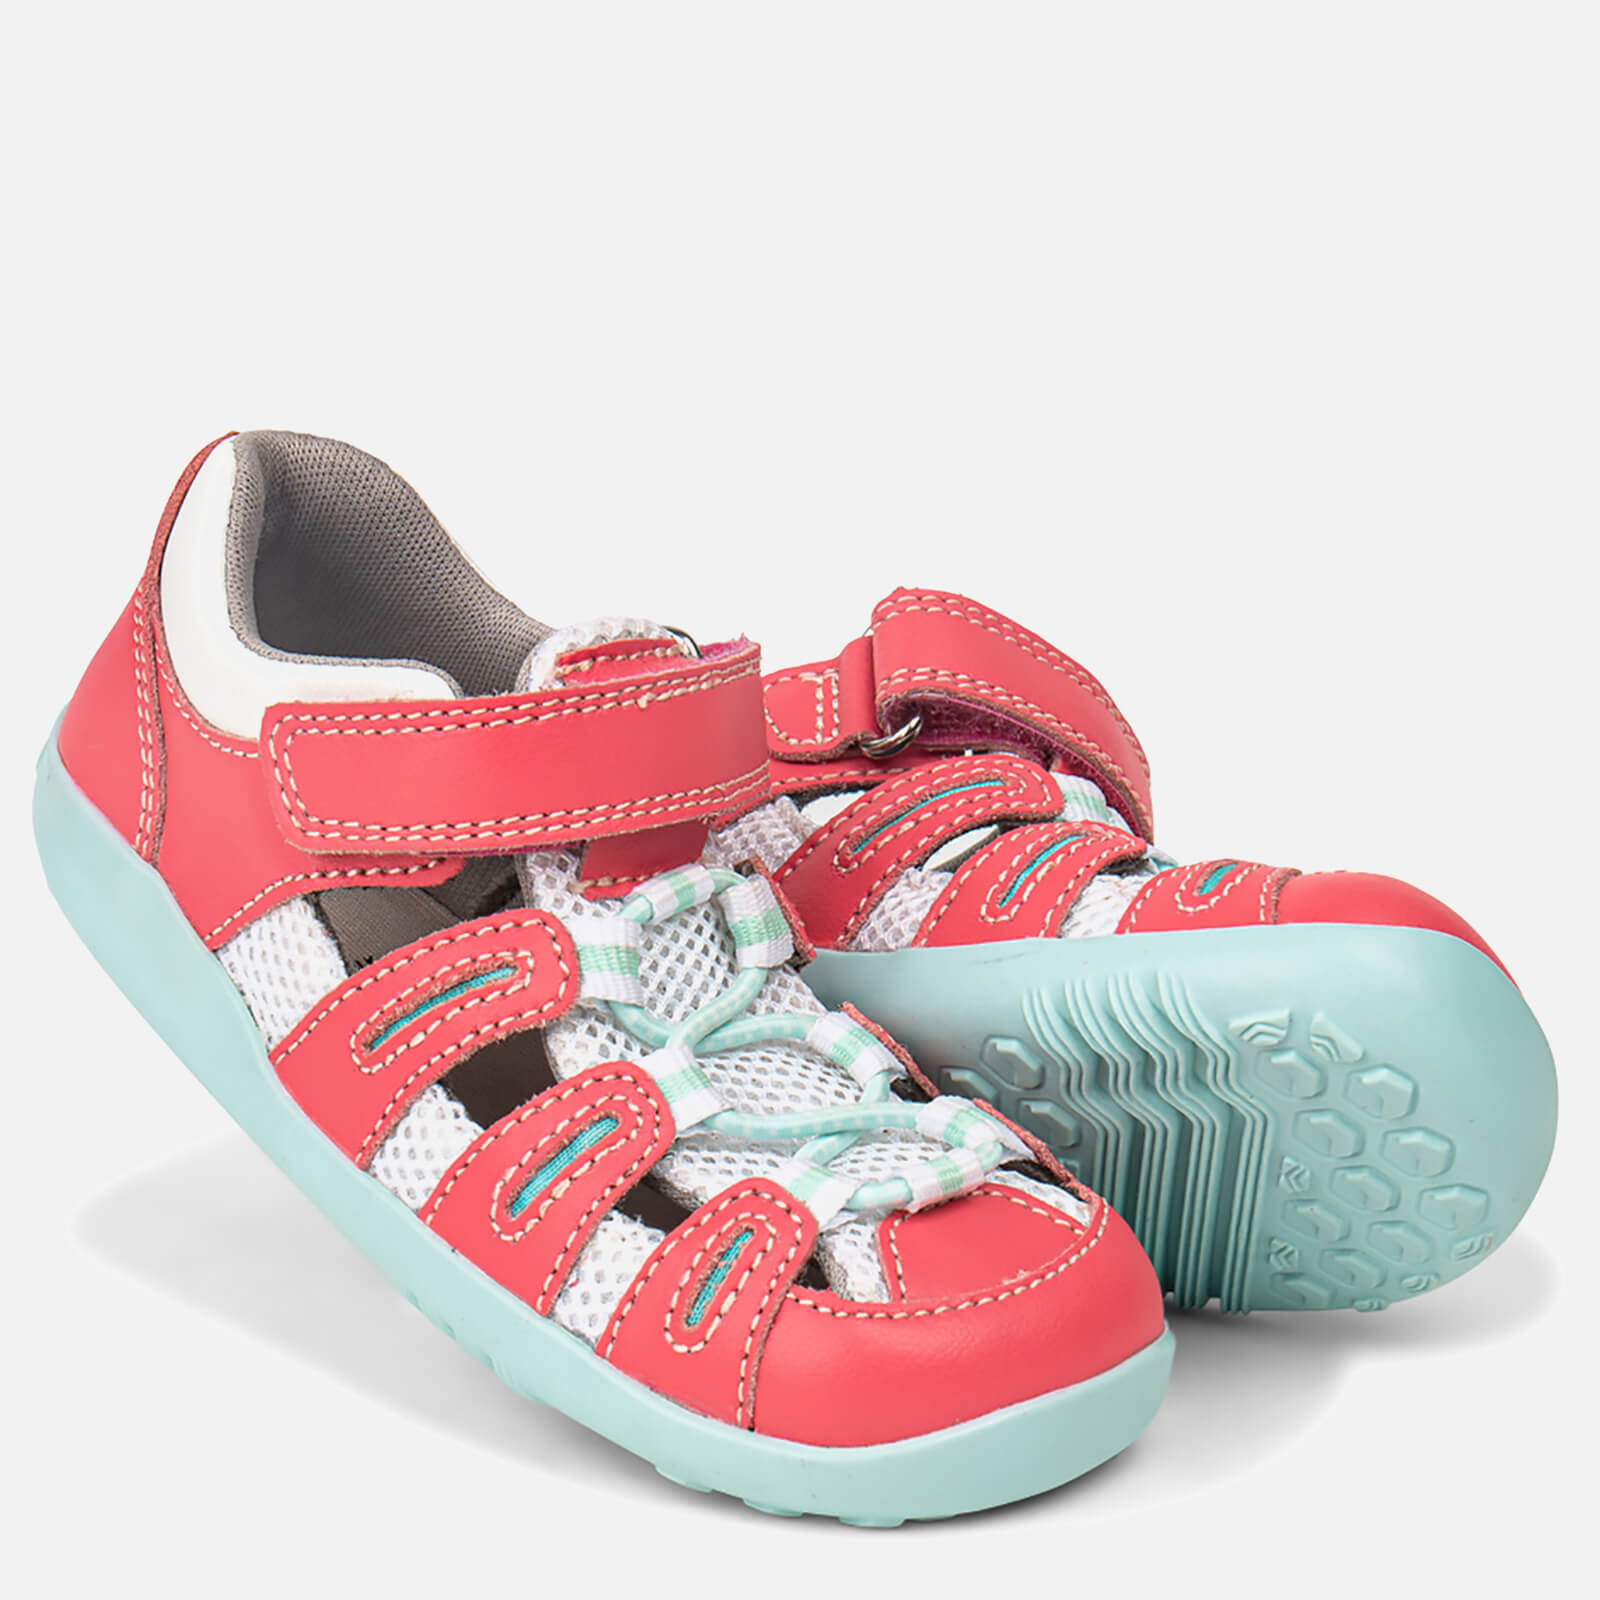 Bobux Girls' I-walk Summit Water Shoes - Guava Mint - Uk 6 Toddler 637203 Childrens Footwear, Pink